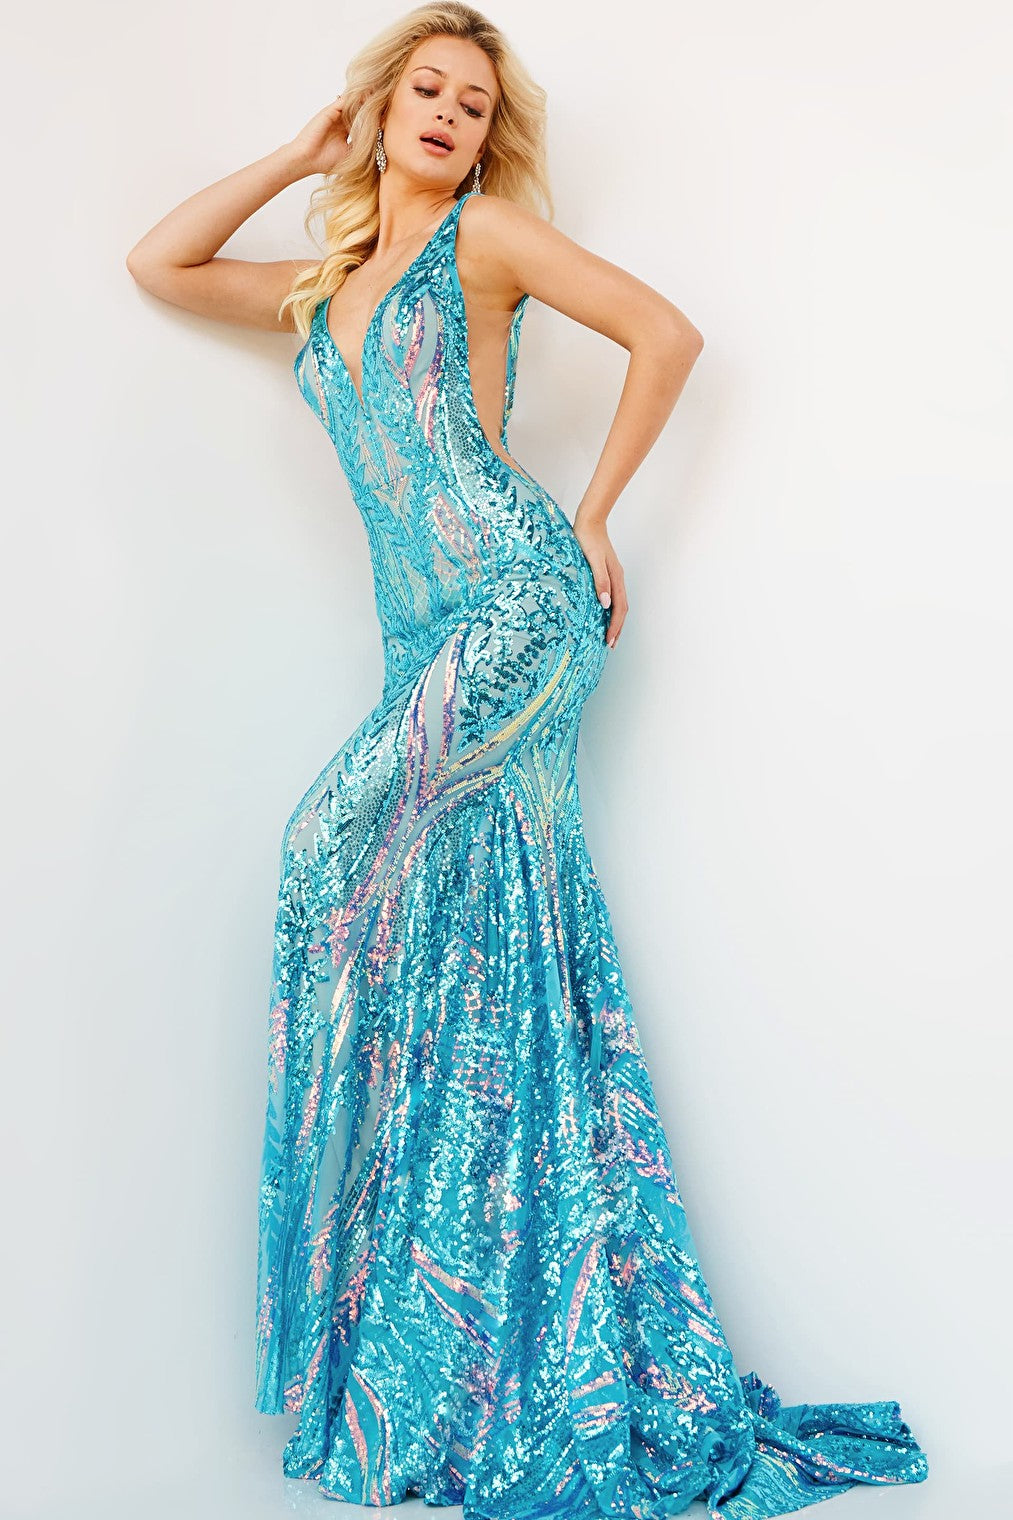 mermaid blue dress 22770